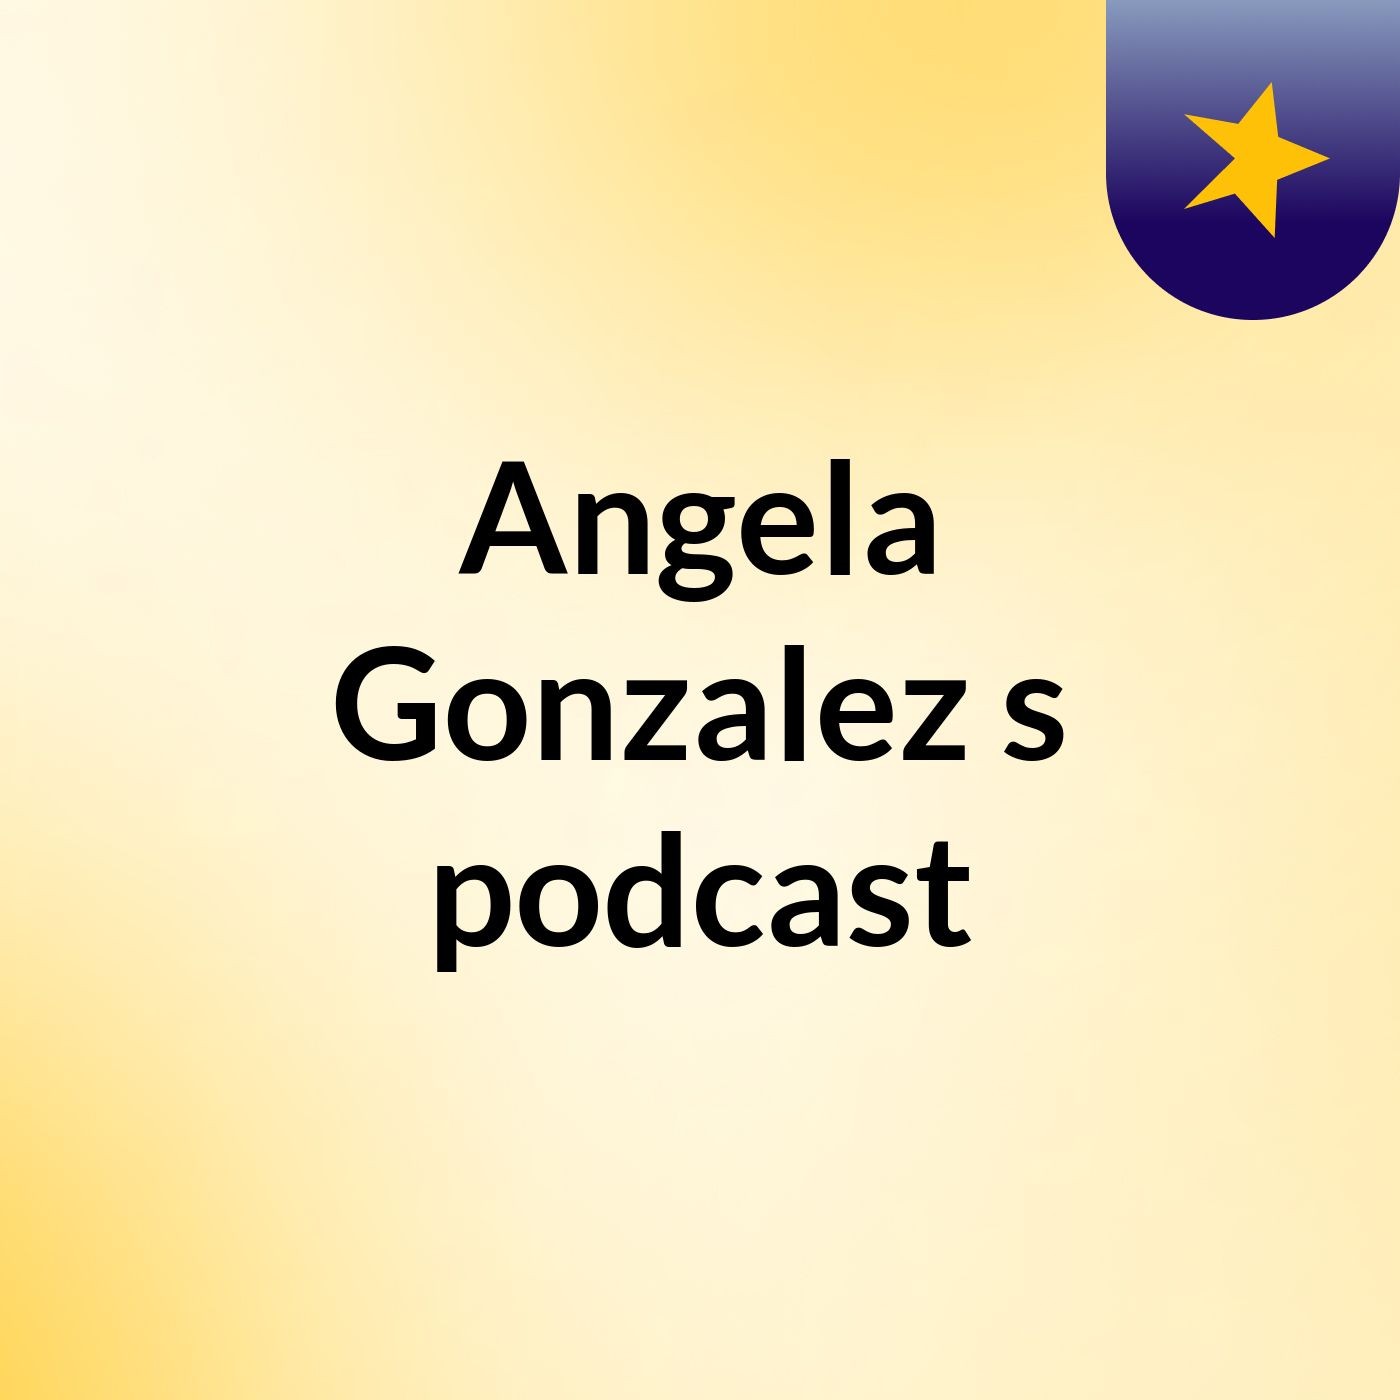 Episode 3 - Angela Gonzalez's podcast